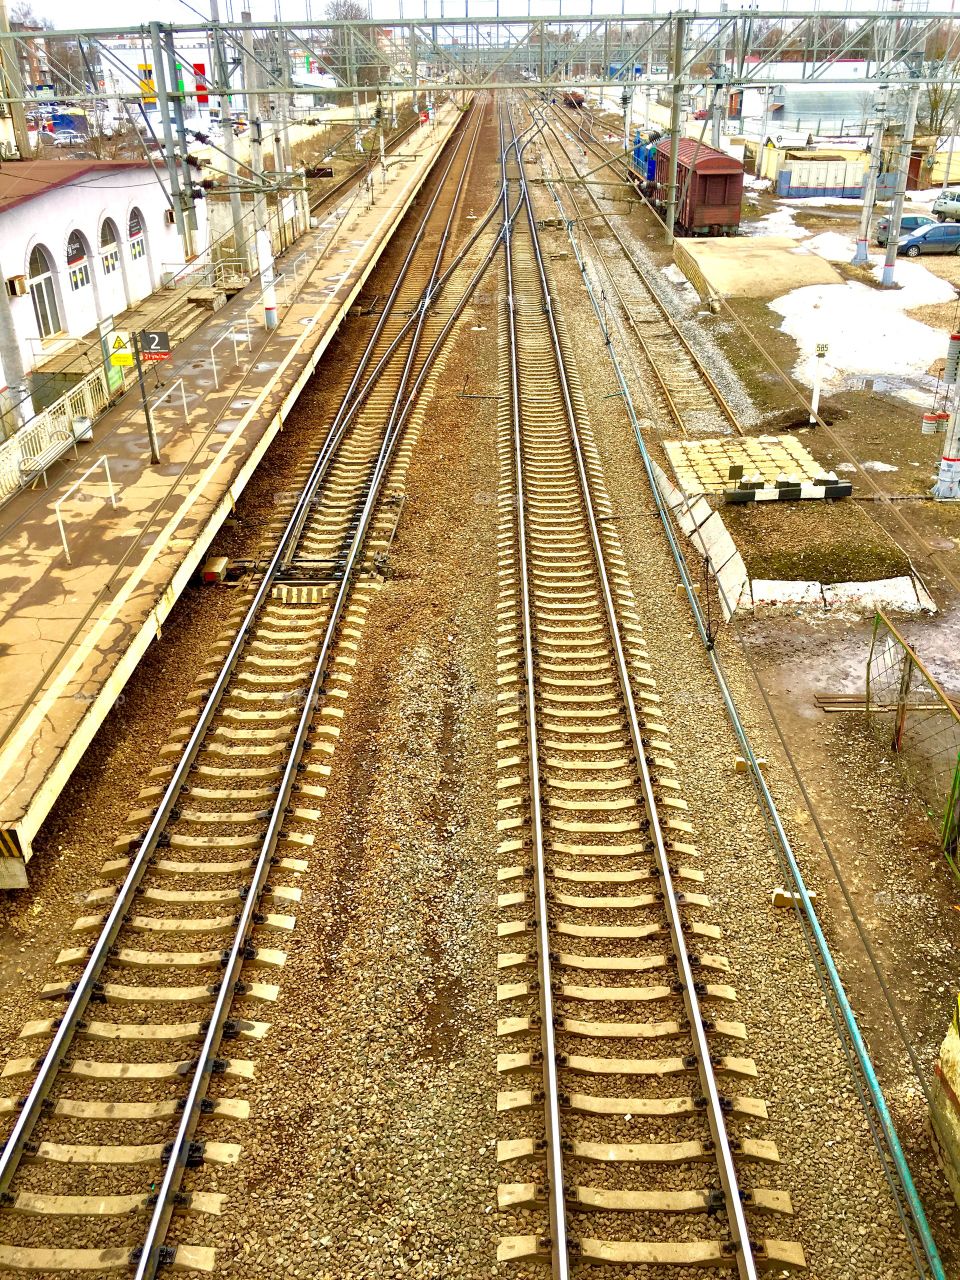 railway lines